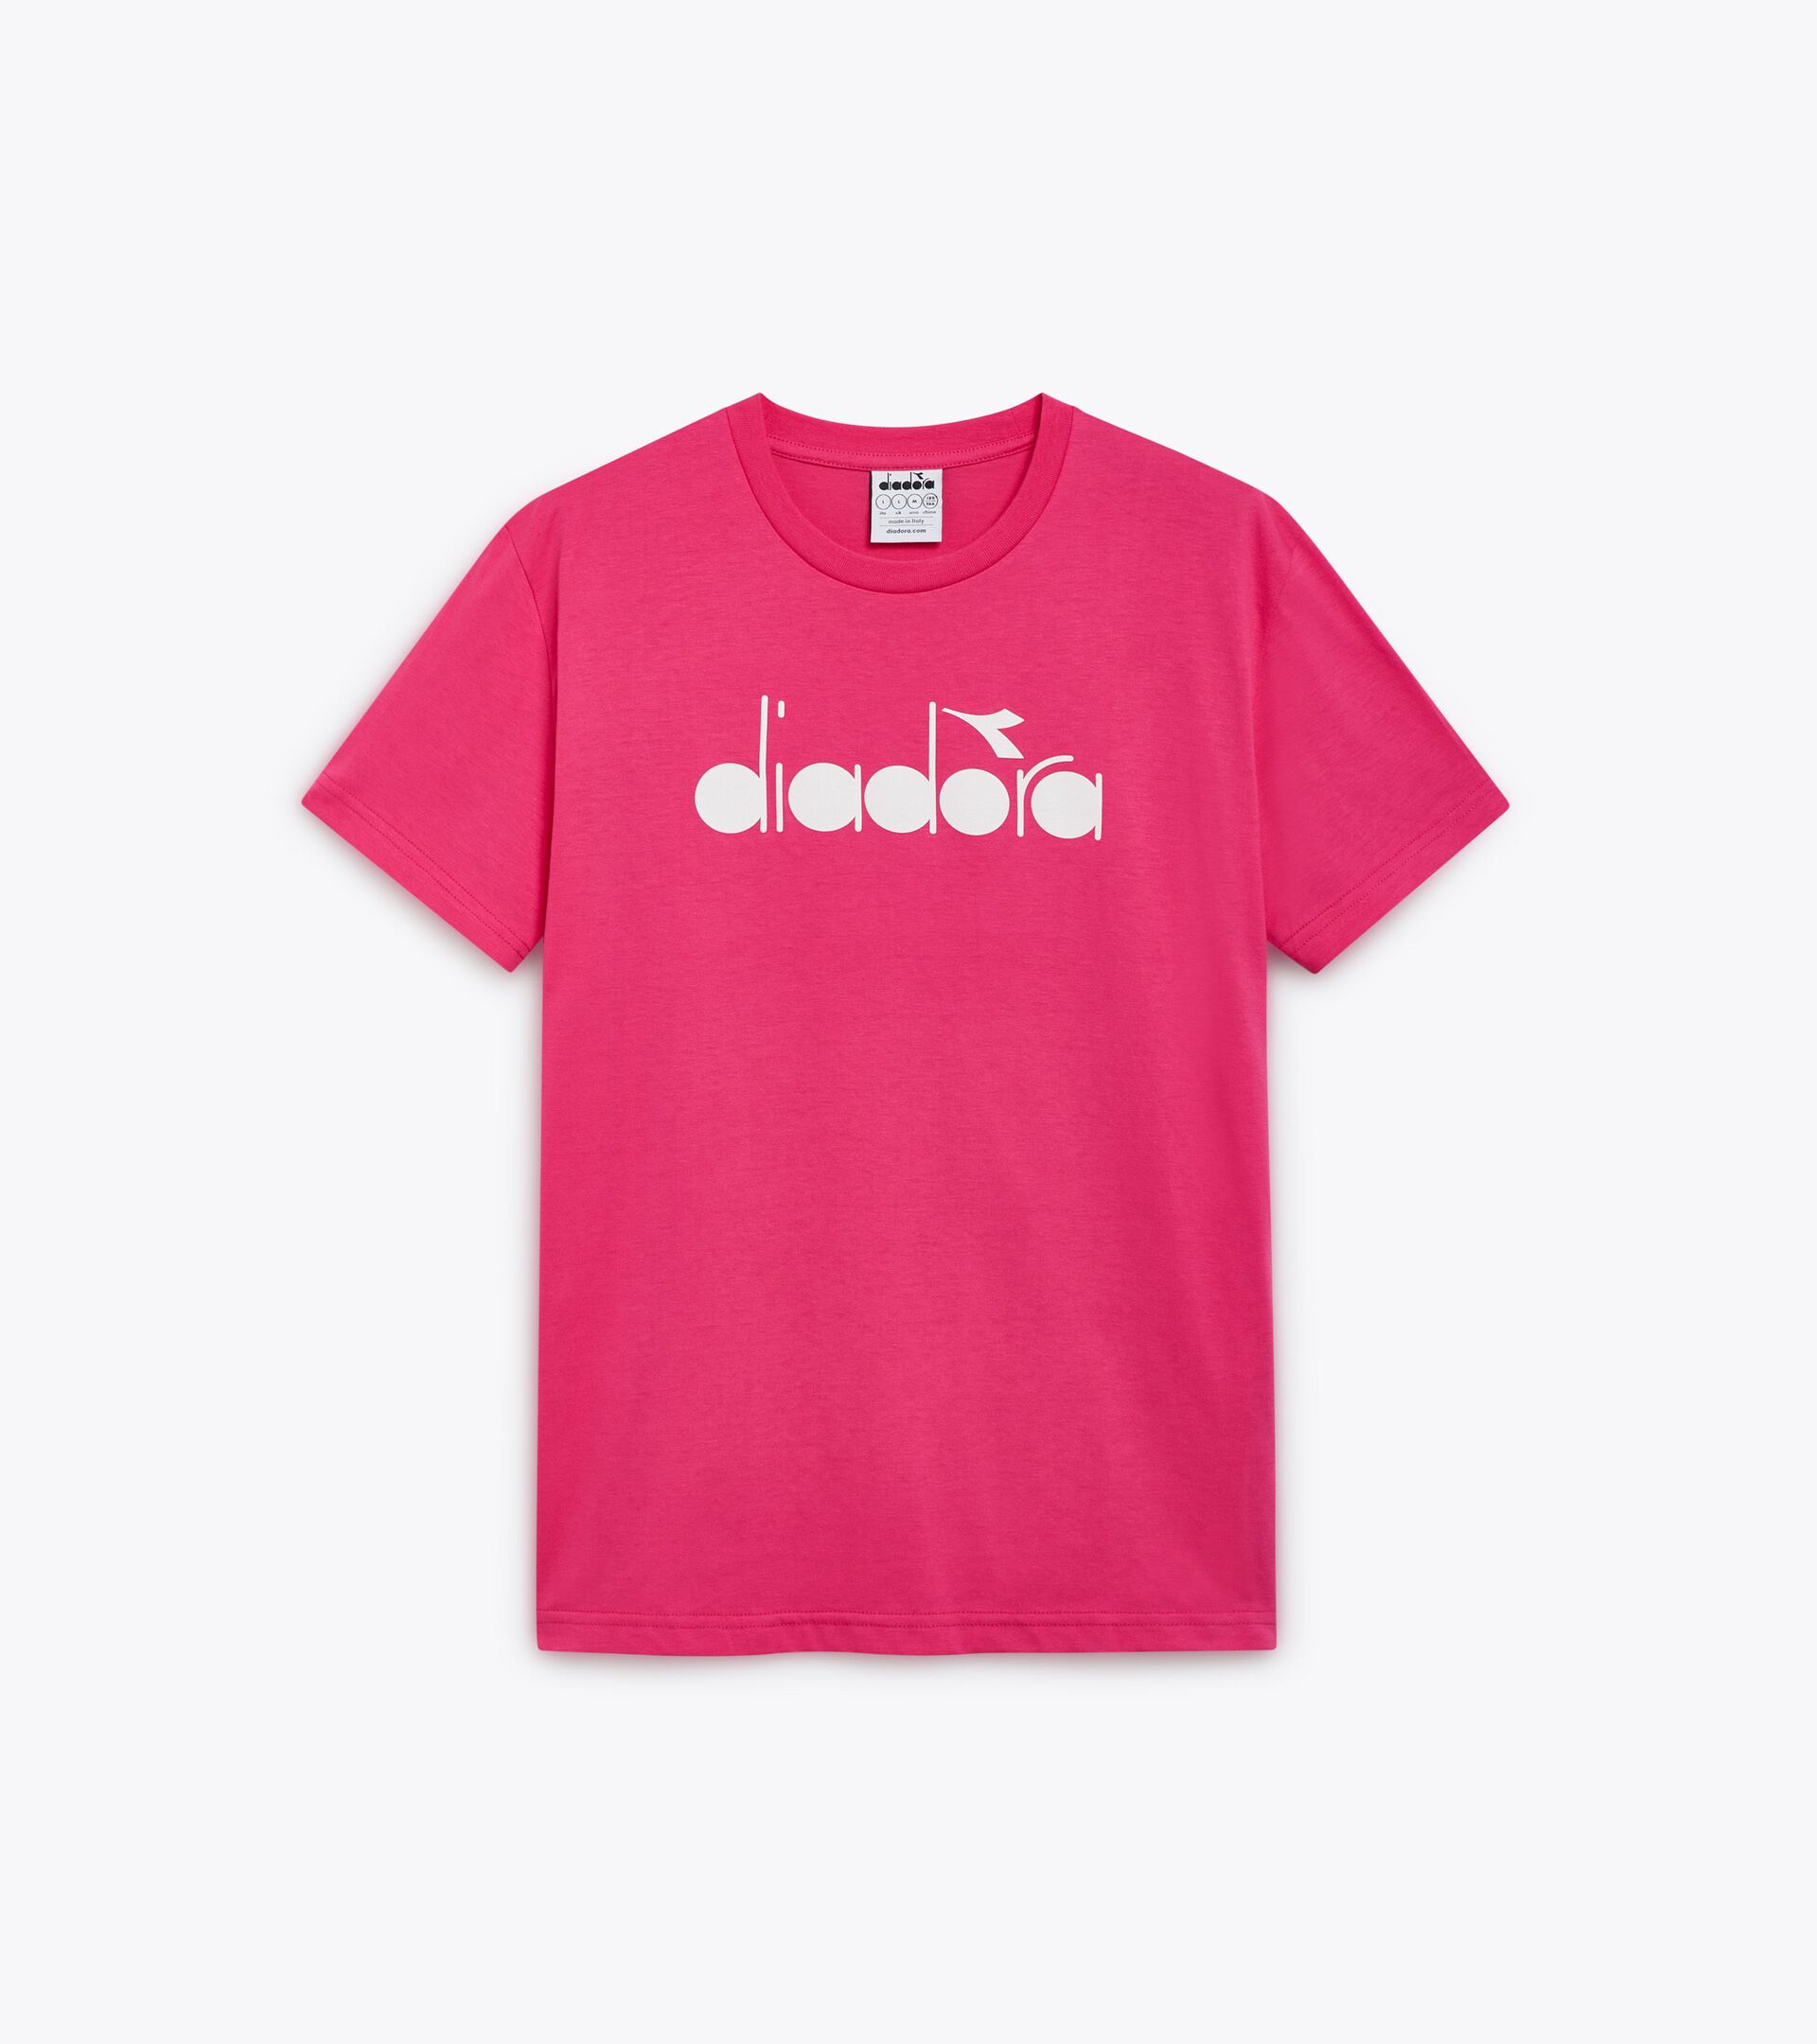 T-shirt - Made in Italy - Gender Neutral  T-SHIRT SS LOGO FRAMBOISE SORBET - Diadora